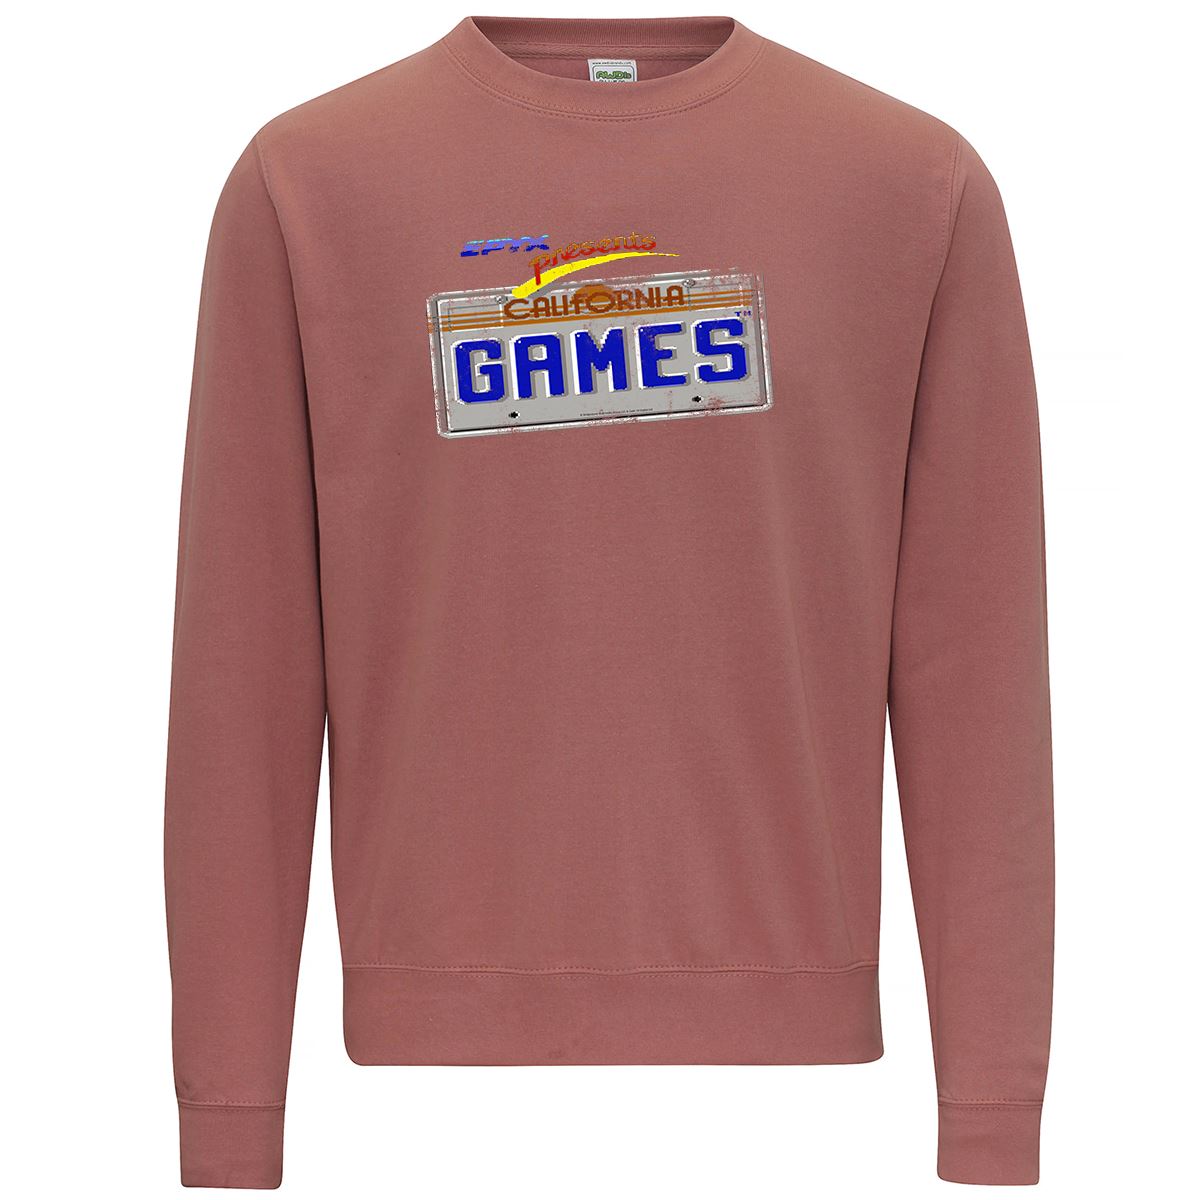 California Games 'License Plate' Retro Gaming Sweatshirt Sweatshirt Seven Squared Small Dusty Pink 